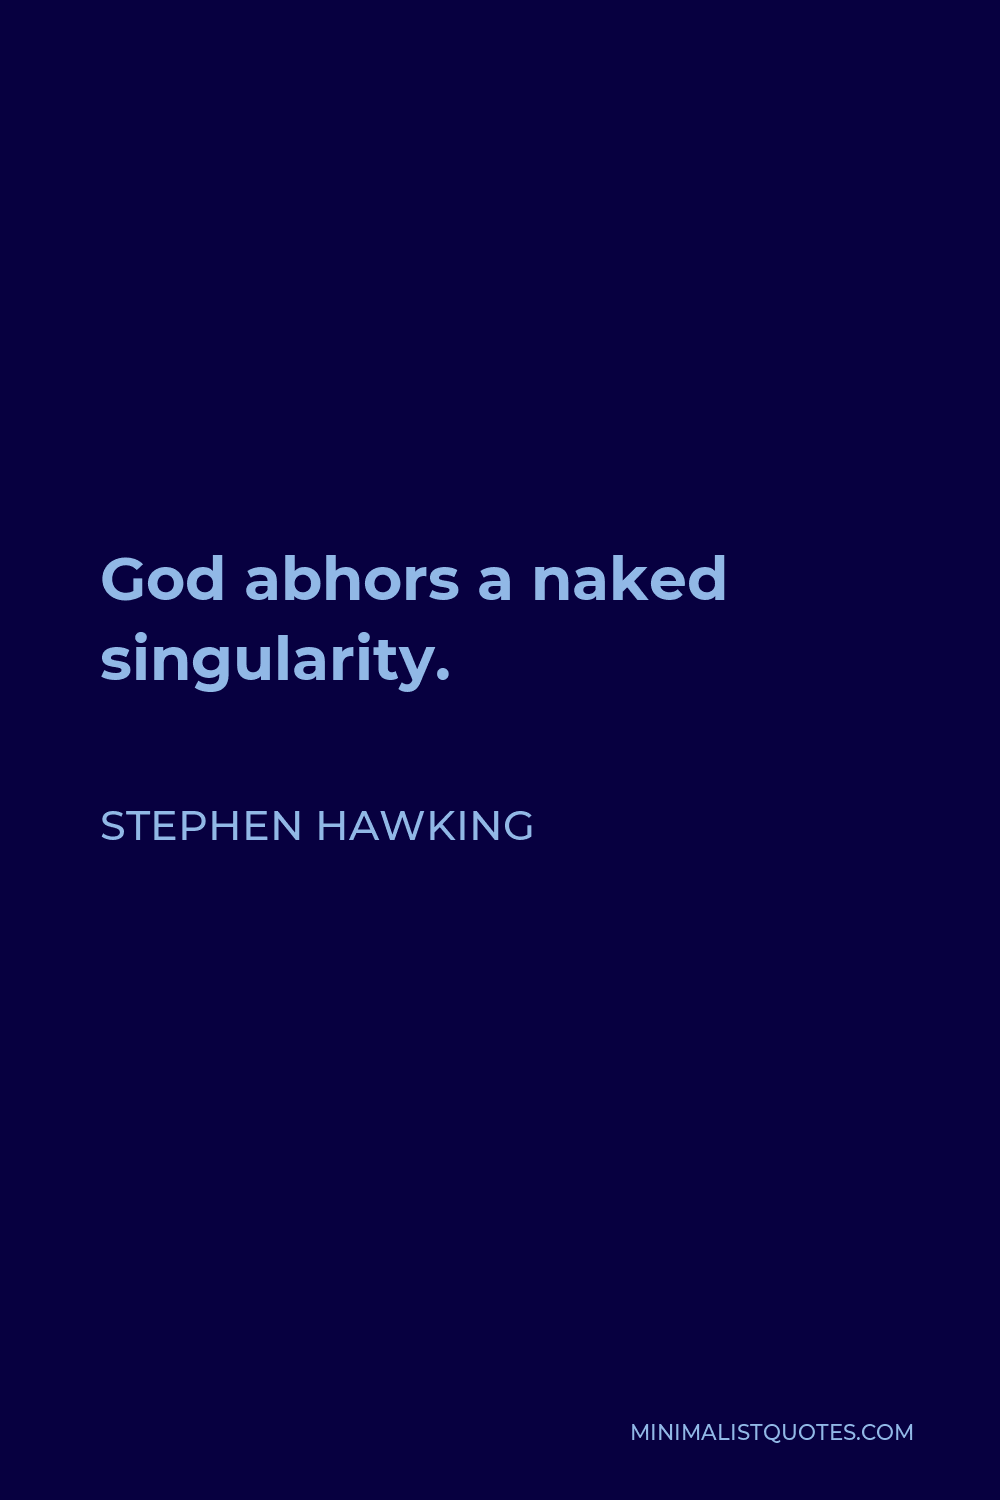 Stephen Hawking Quote - God abhors a naked singularity.